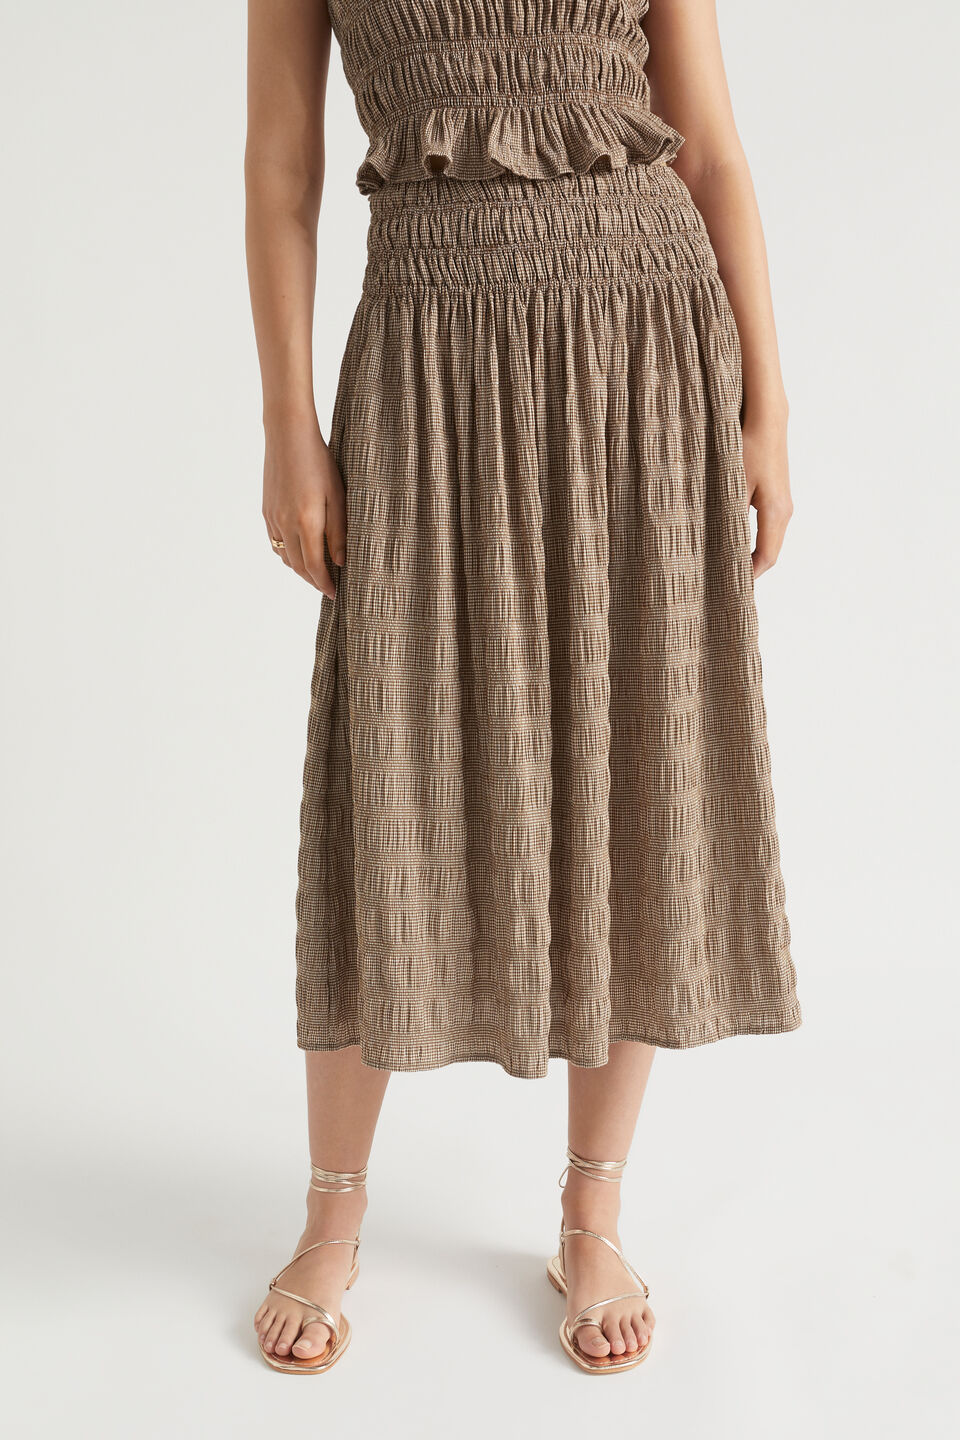 Textured Gingham Midi Skirt  Pecan Brown Gingham